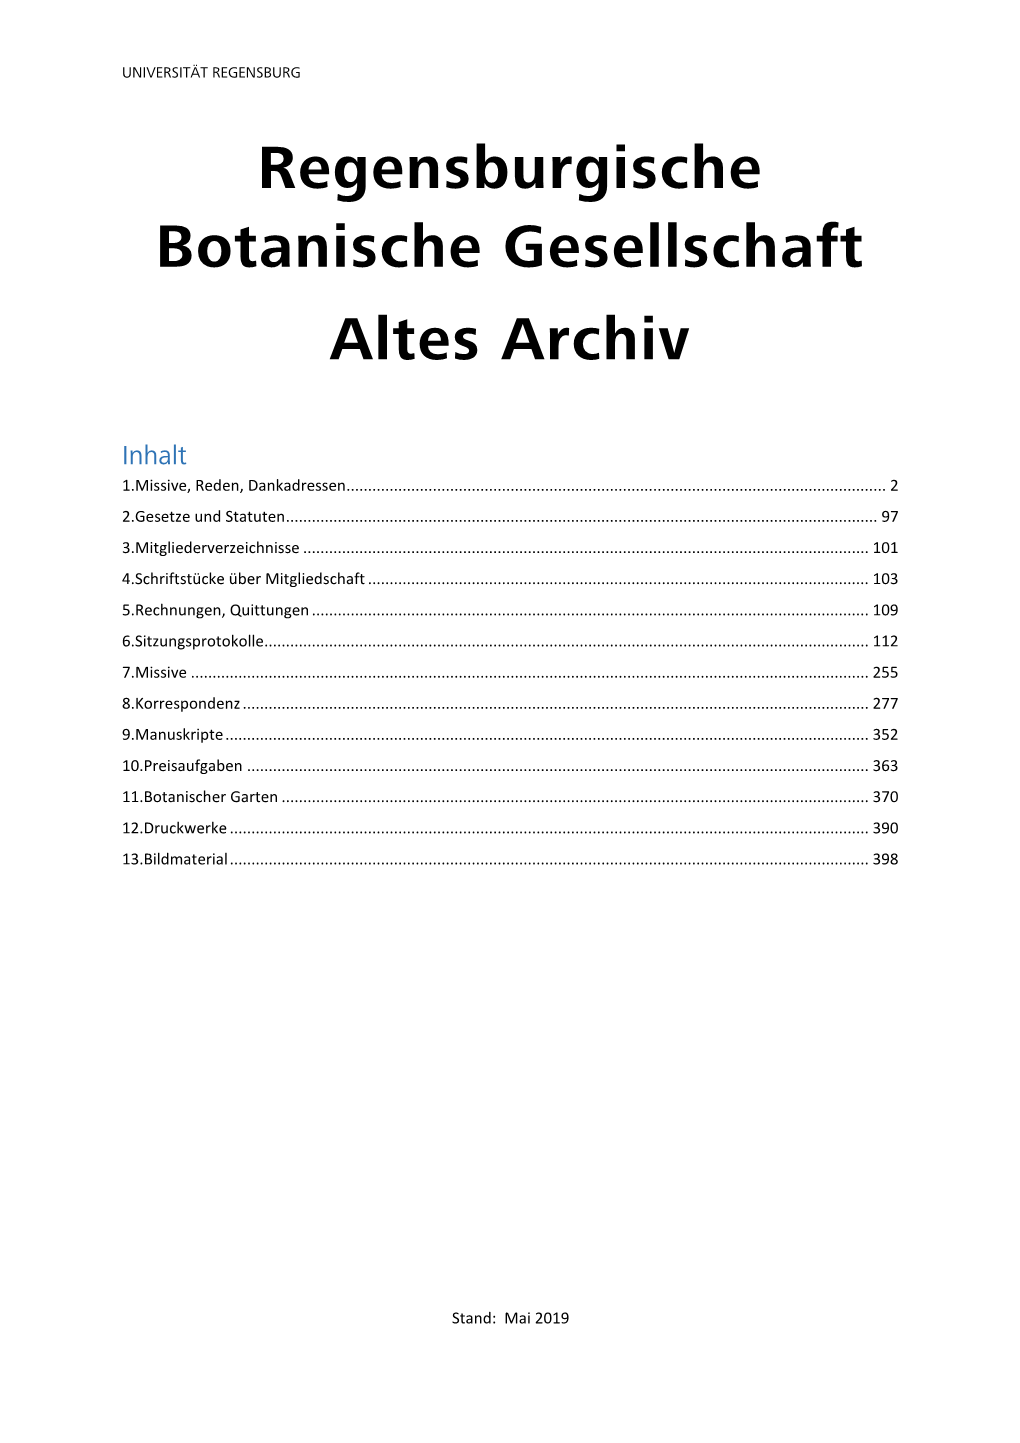 Regensburgische Botanische Gesellschaft Altes Archiv